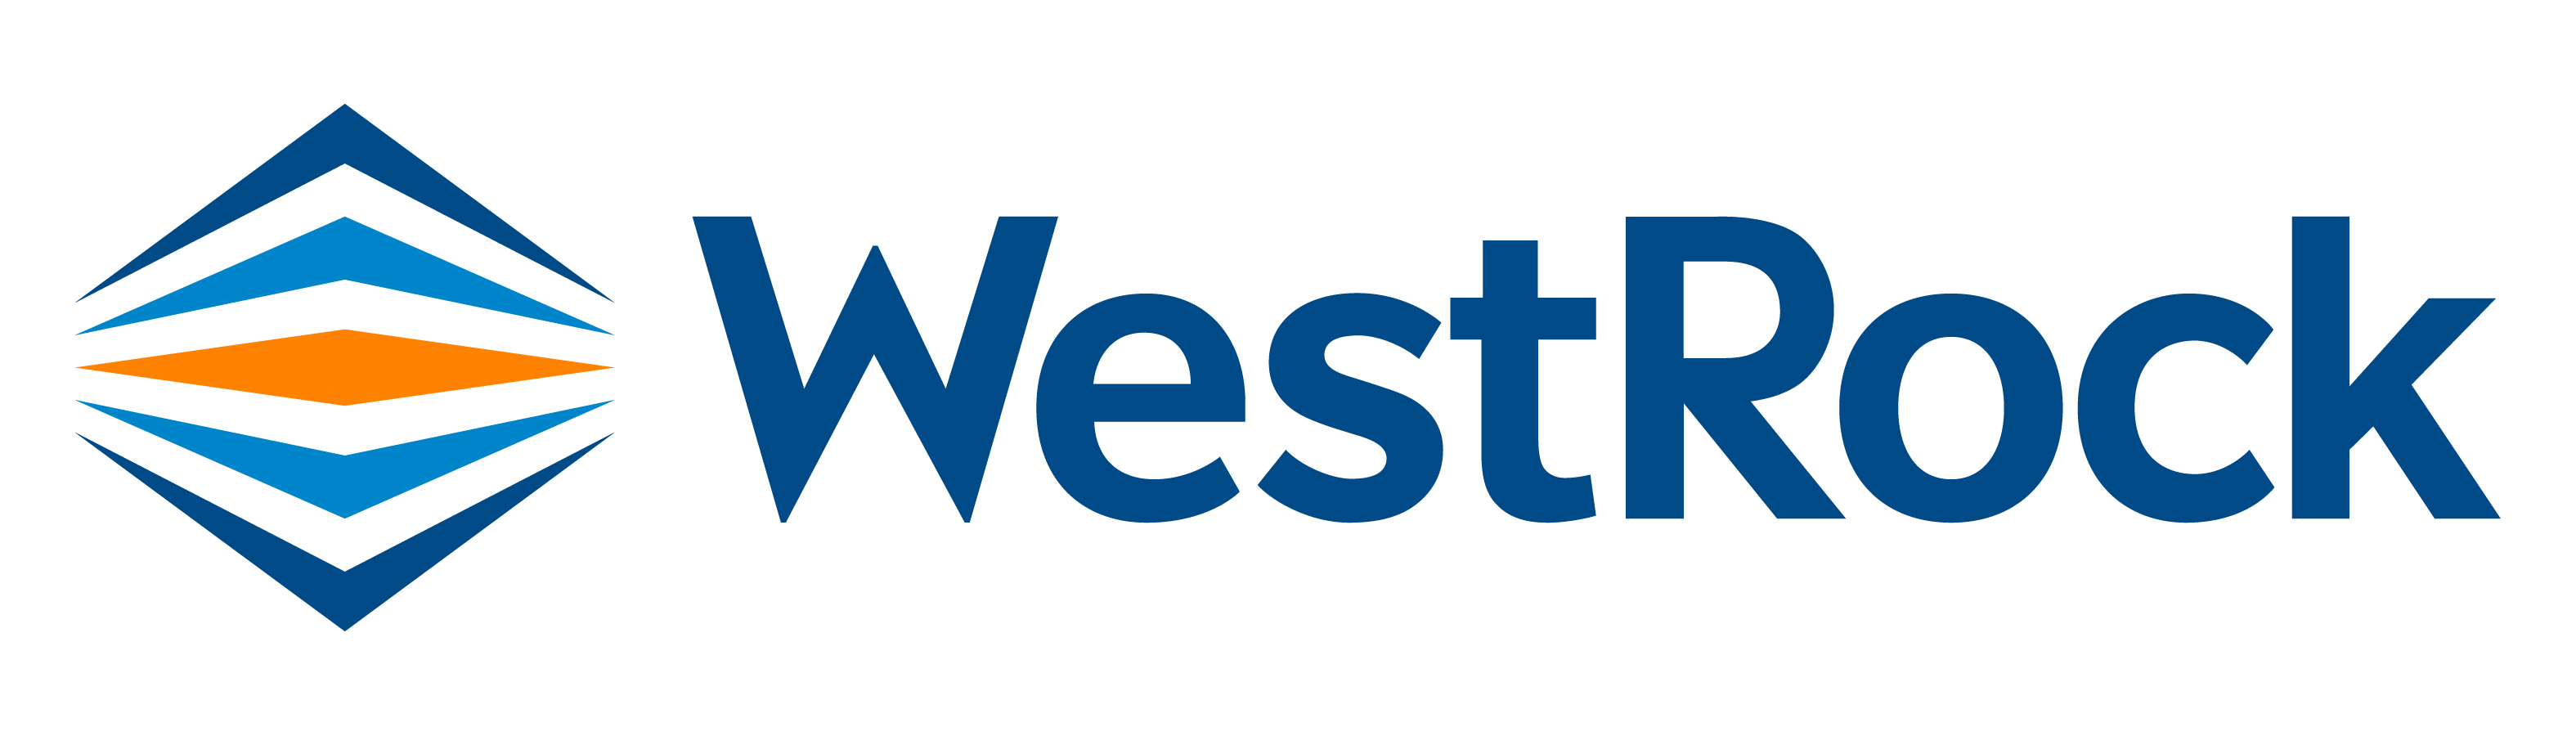 WestRock Logo PNG Image